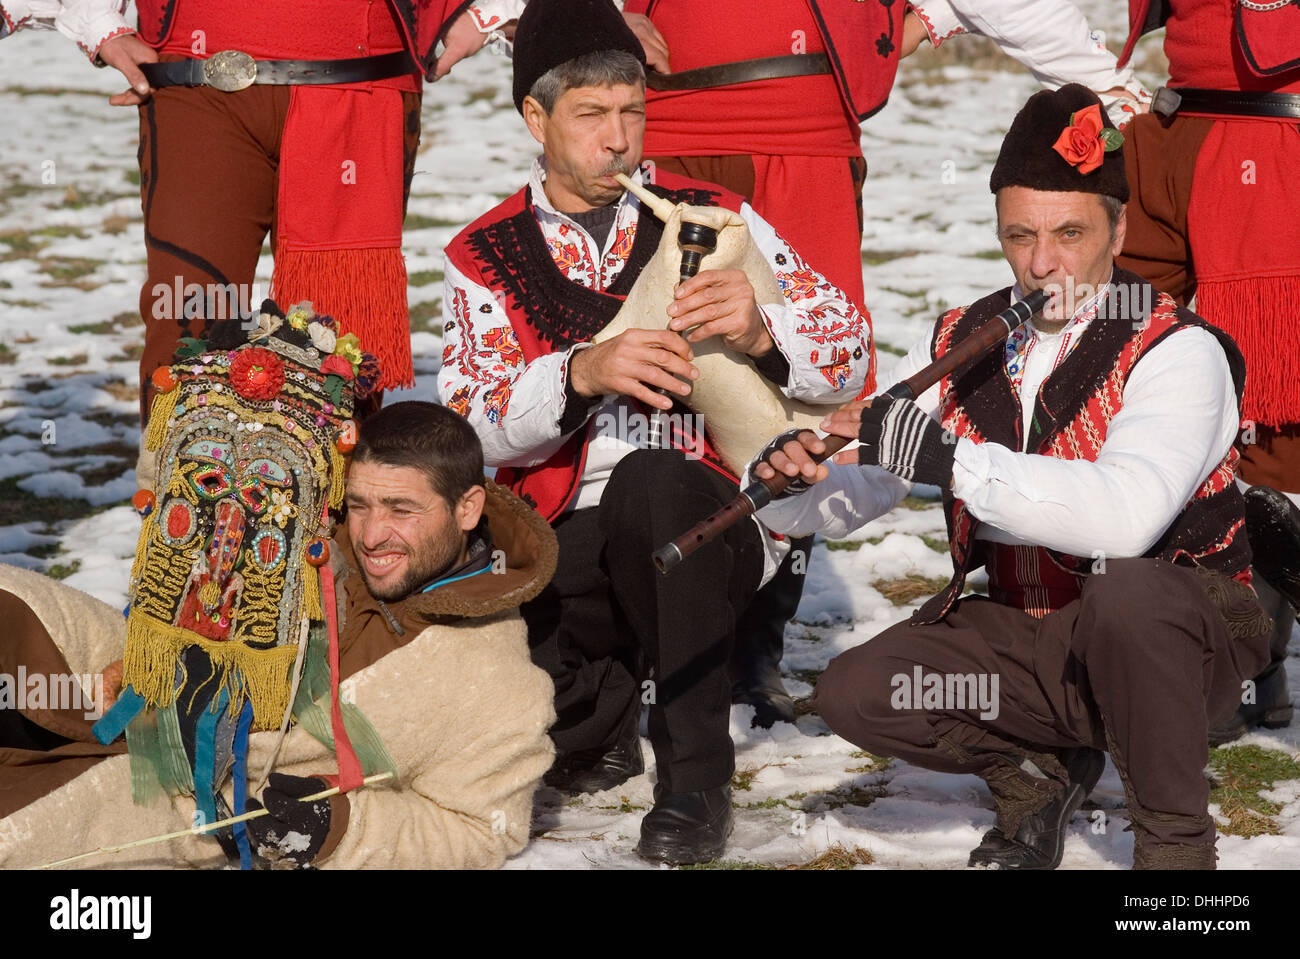 Koledari singers on Christmas Day celebrations Stock Photo